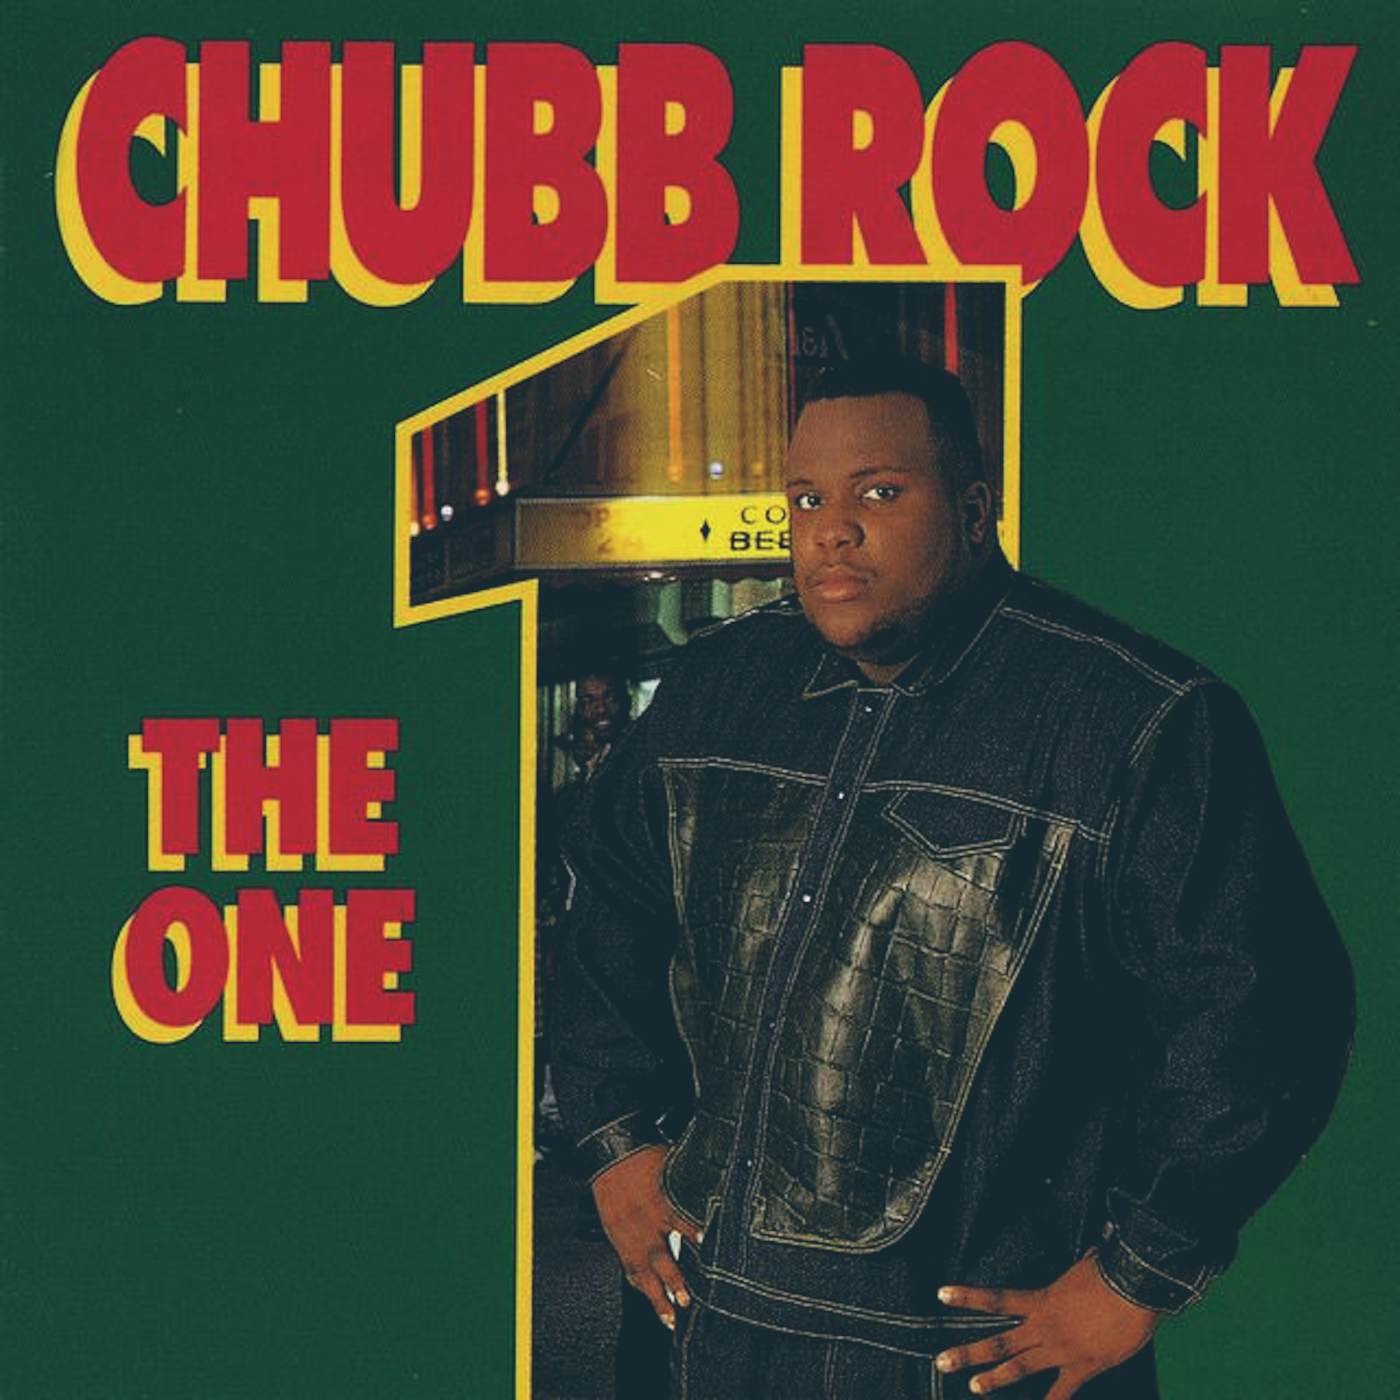 Chubb Rock